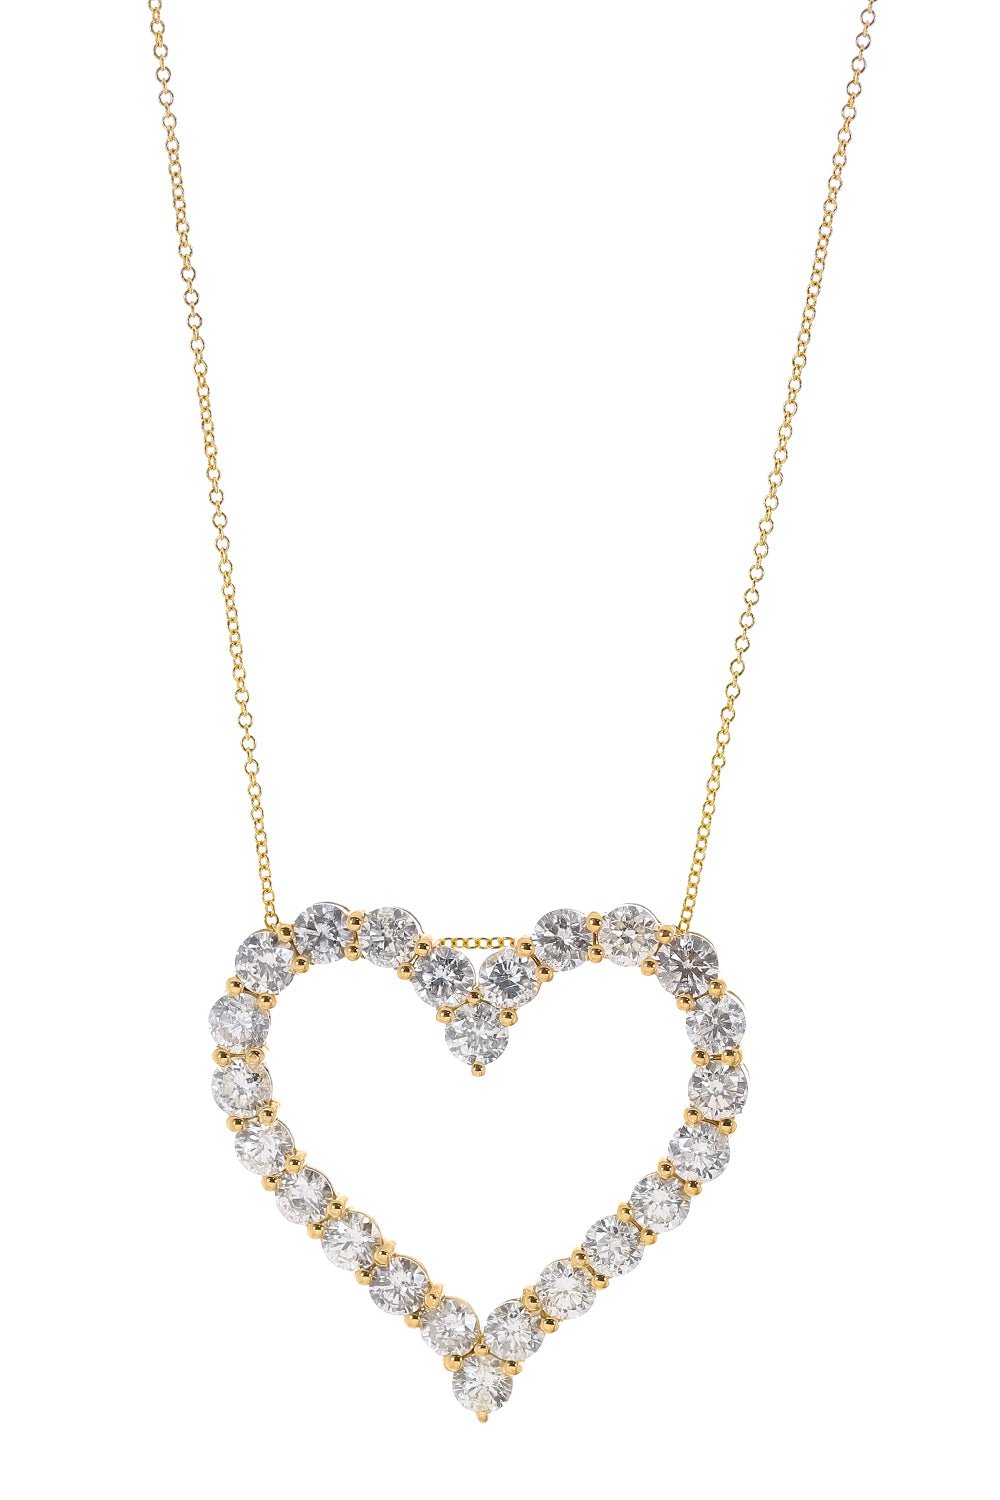 DIANA M. JEWELS-Diamond Heart Necklace-YELLOW GOLD